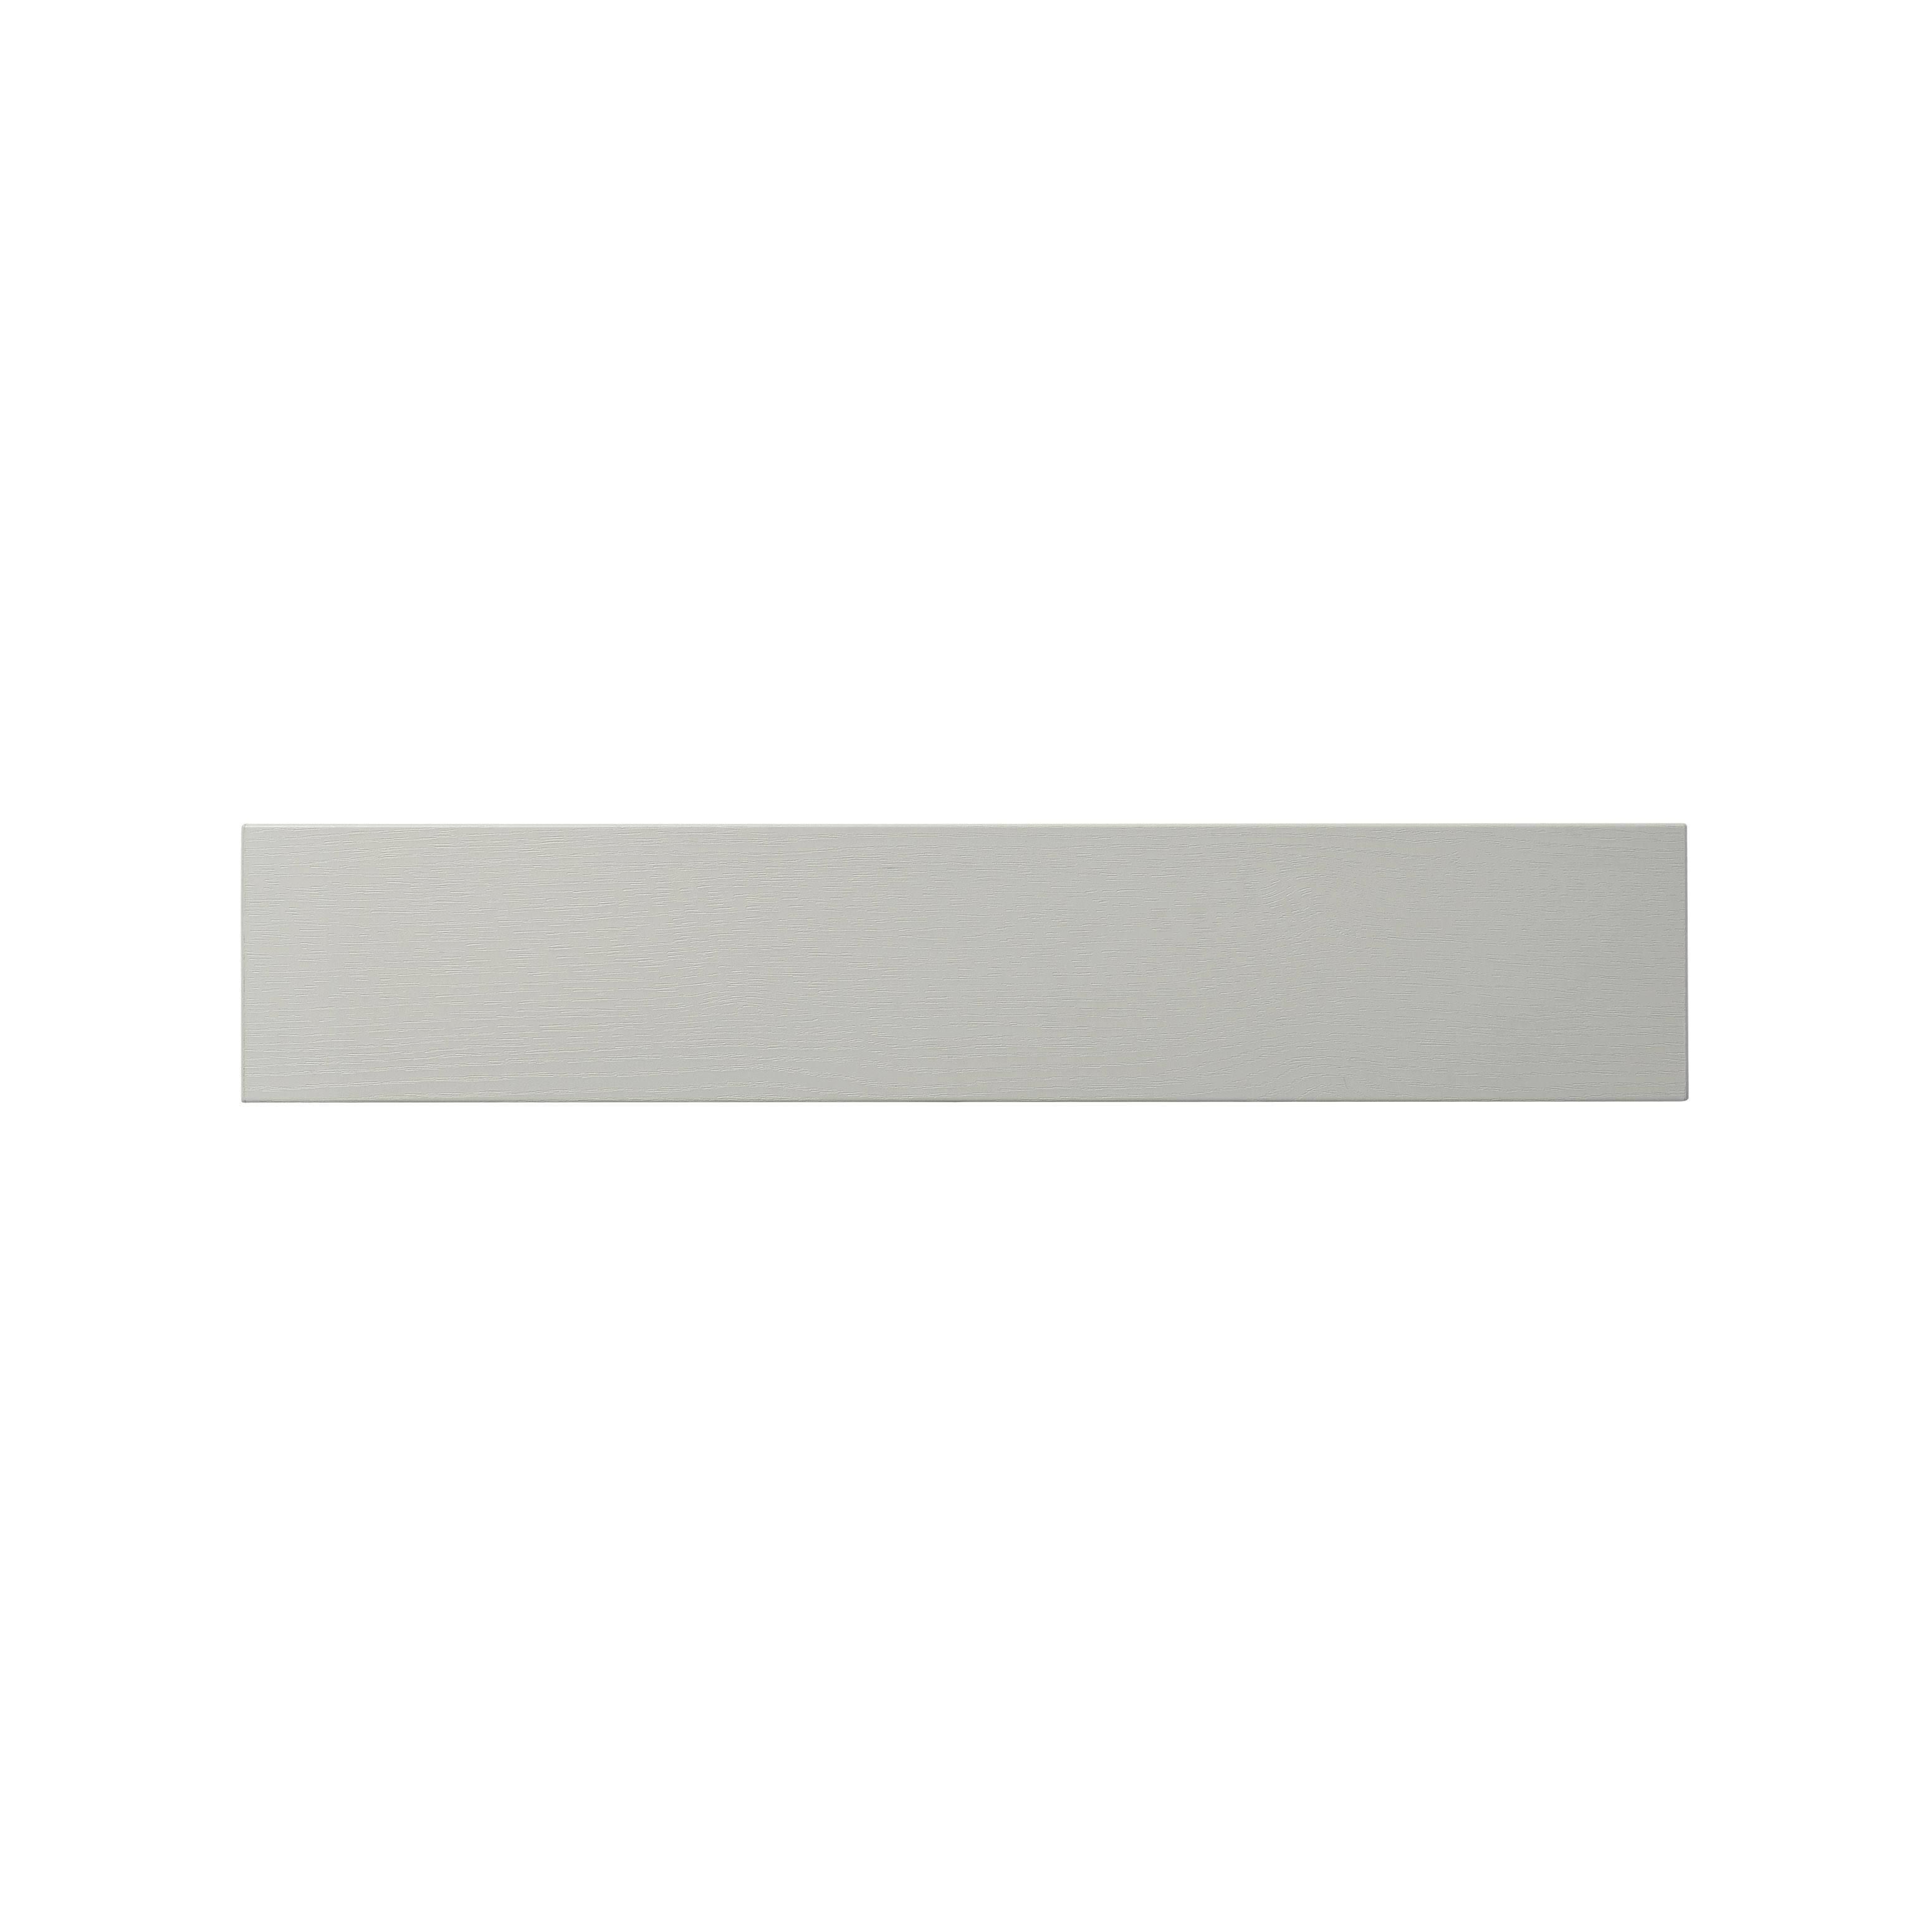 GoodHome Alpinia Matt grey painted wood effect shaker Standard Appliance Filler panel (H)115mm (W)597mm